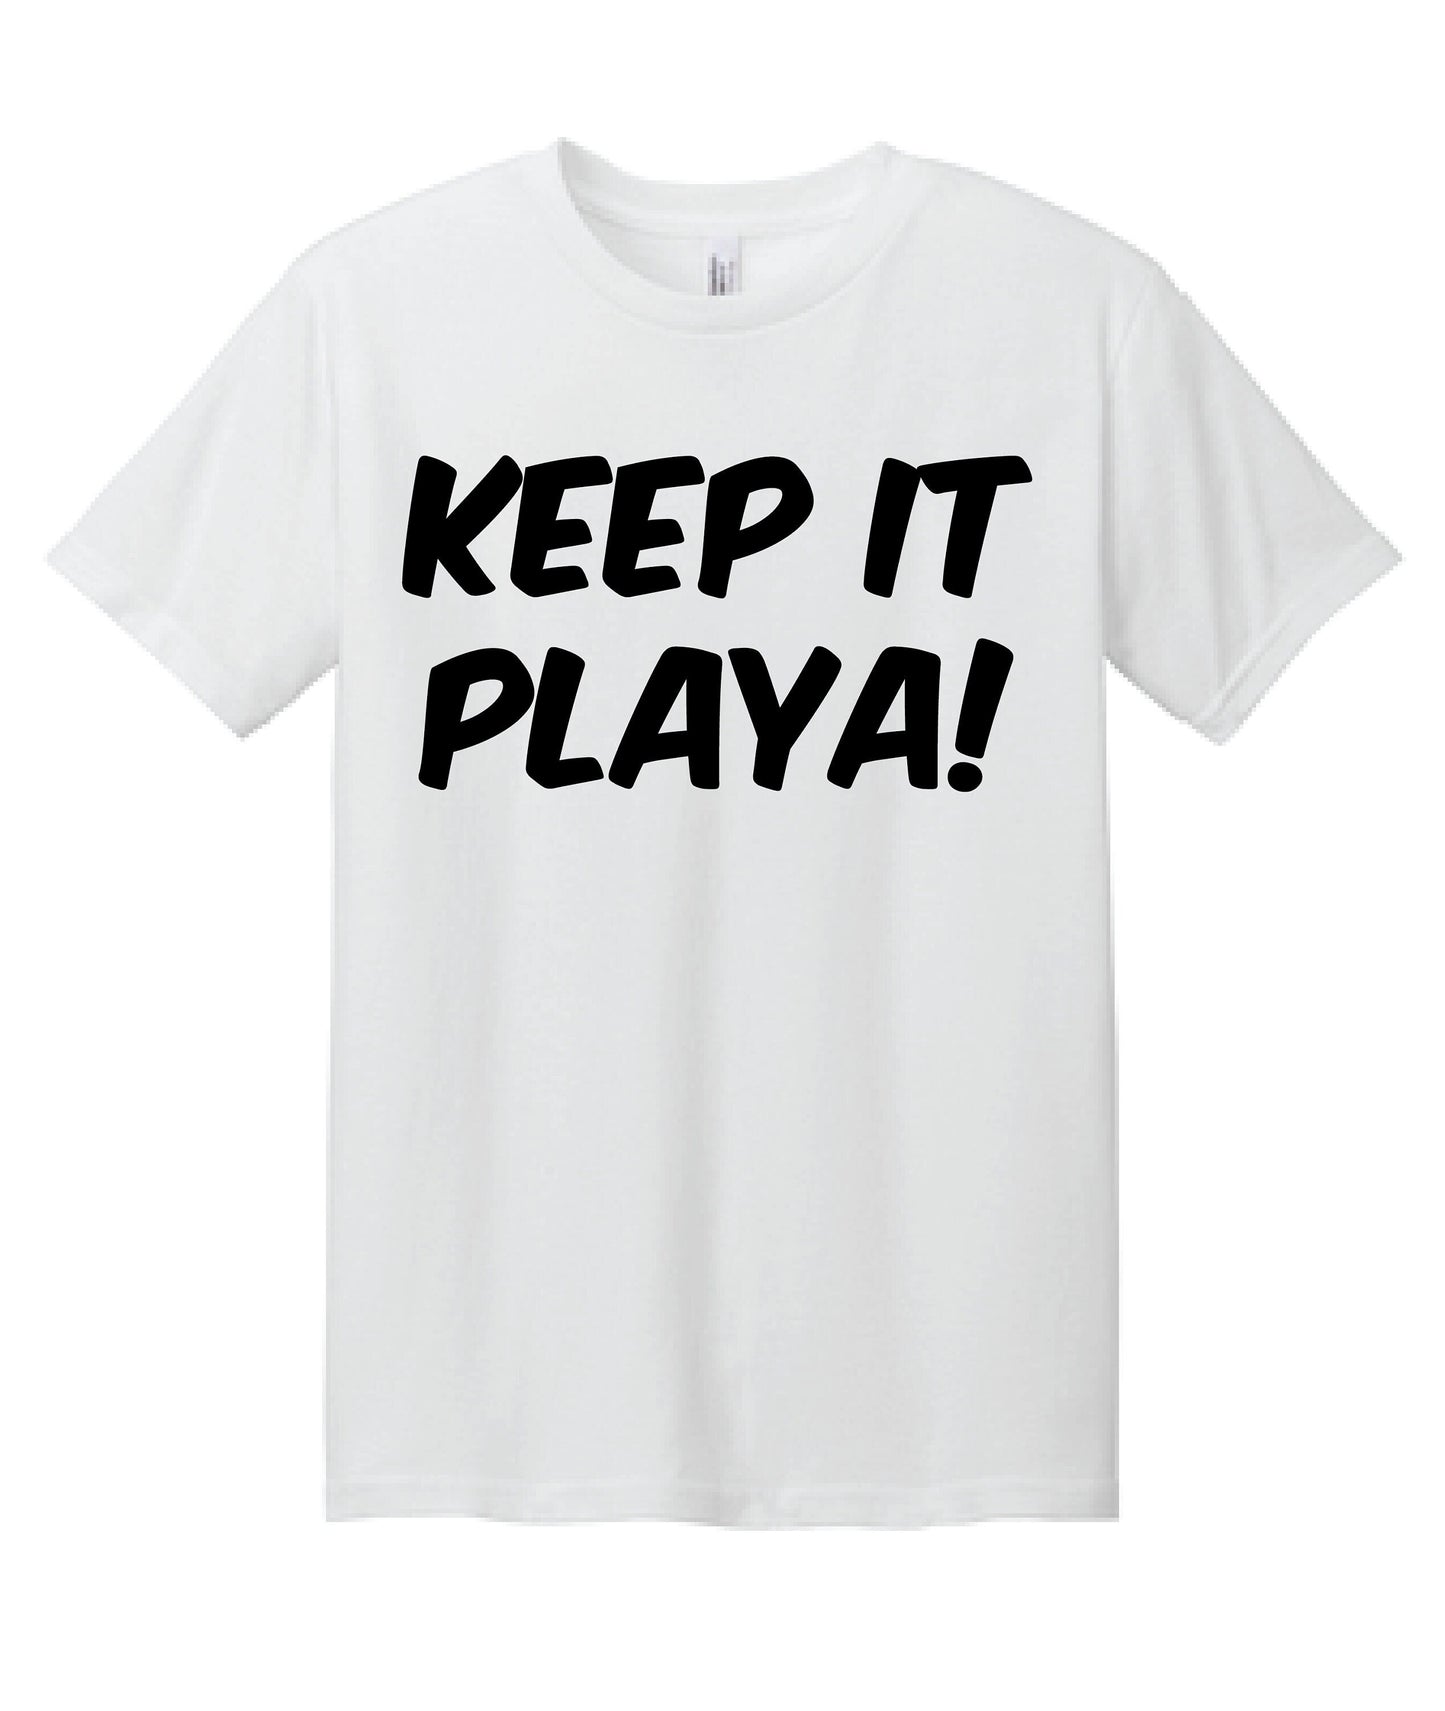 Keep It Playa! Unisex t-shirt sizes S-3XL - Keeping It Playa tee- Statement Tee